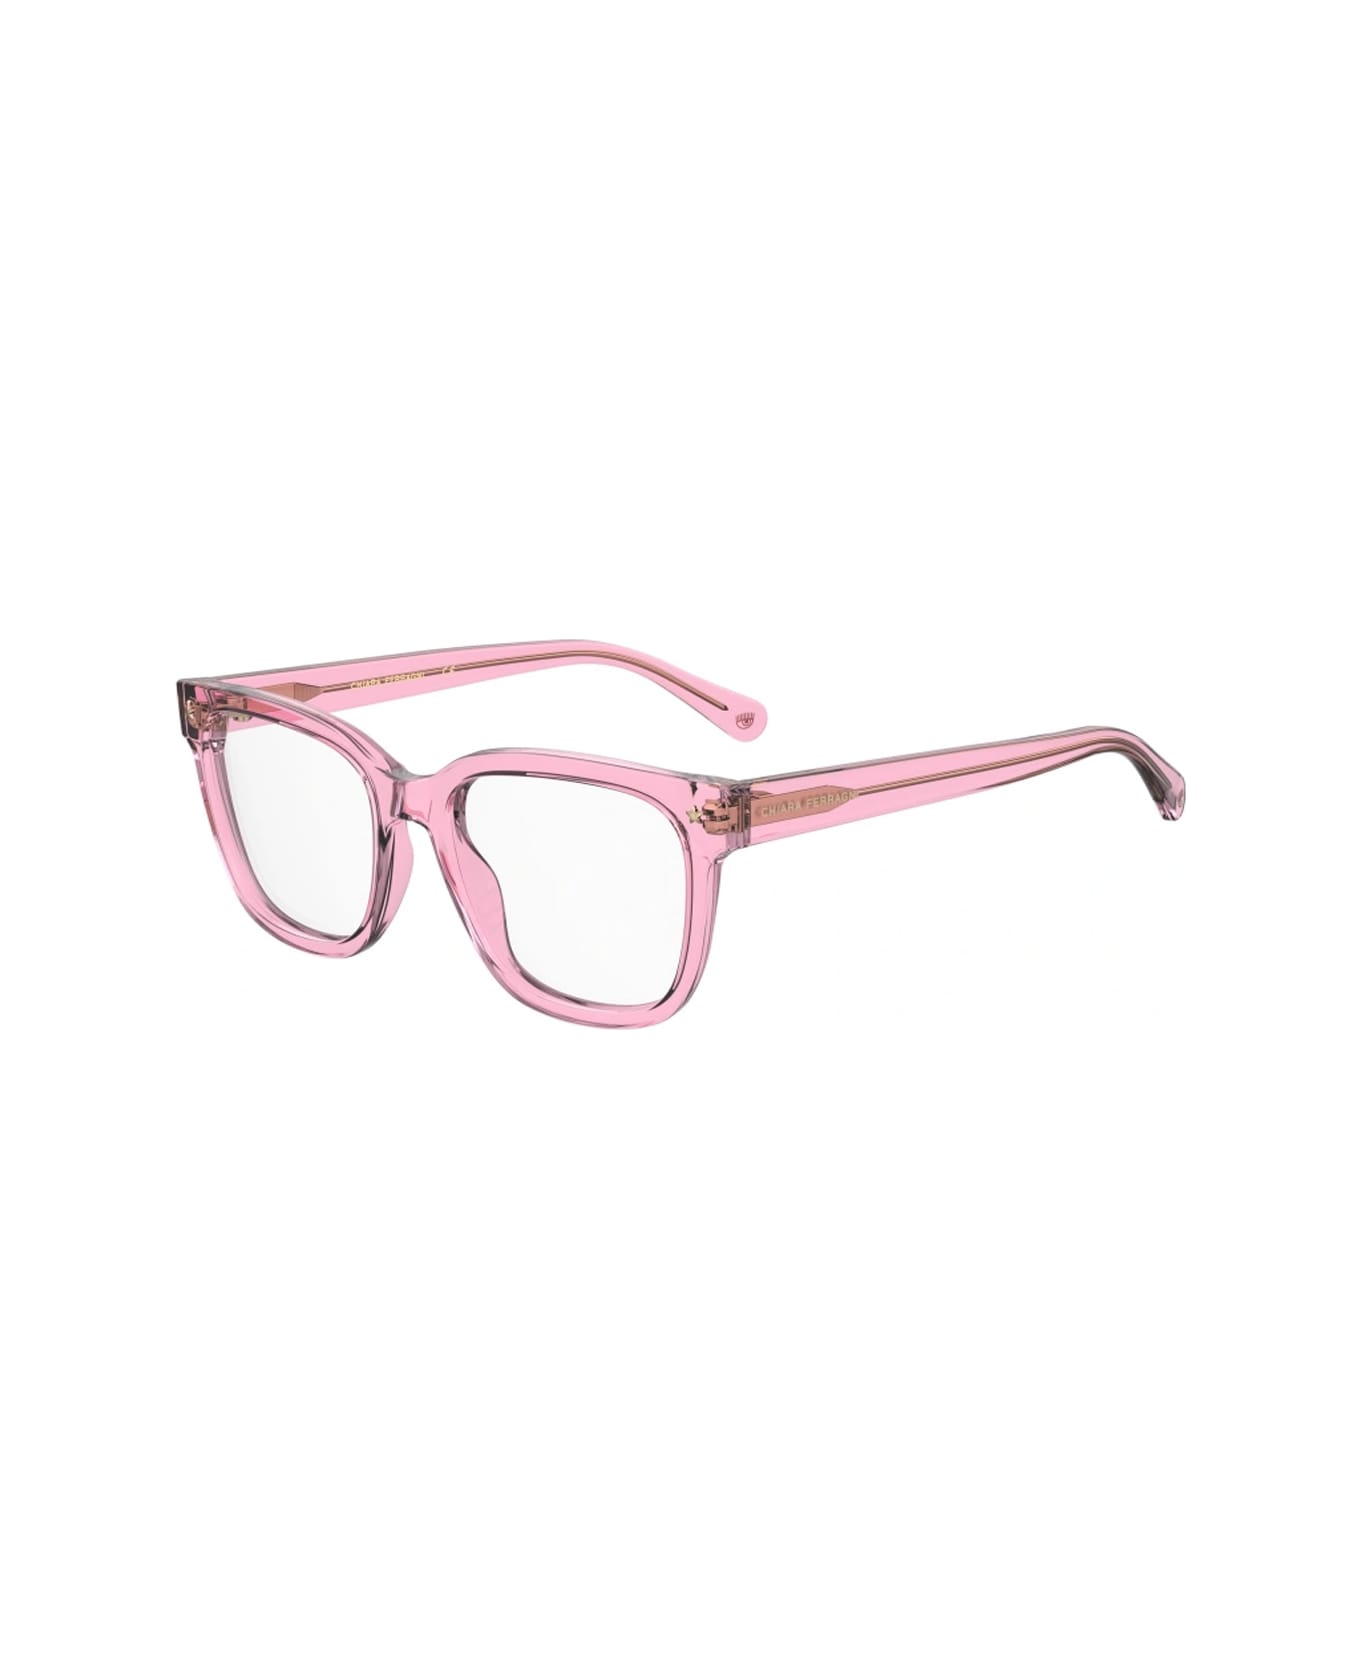 Chiara Ferragni Cf 7027 35j/18 Pink Glasses - Rosa